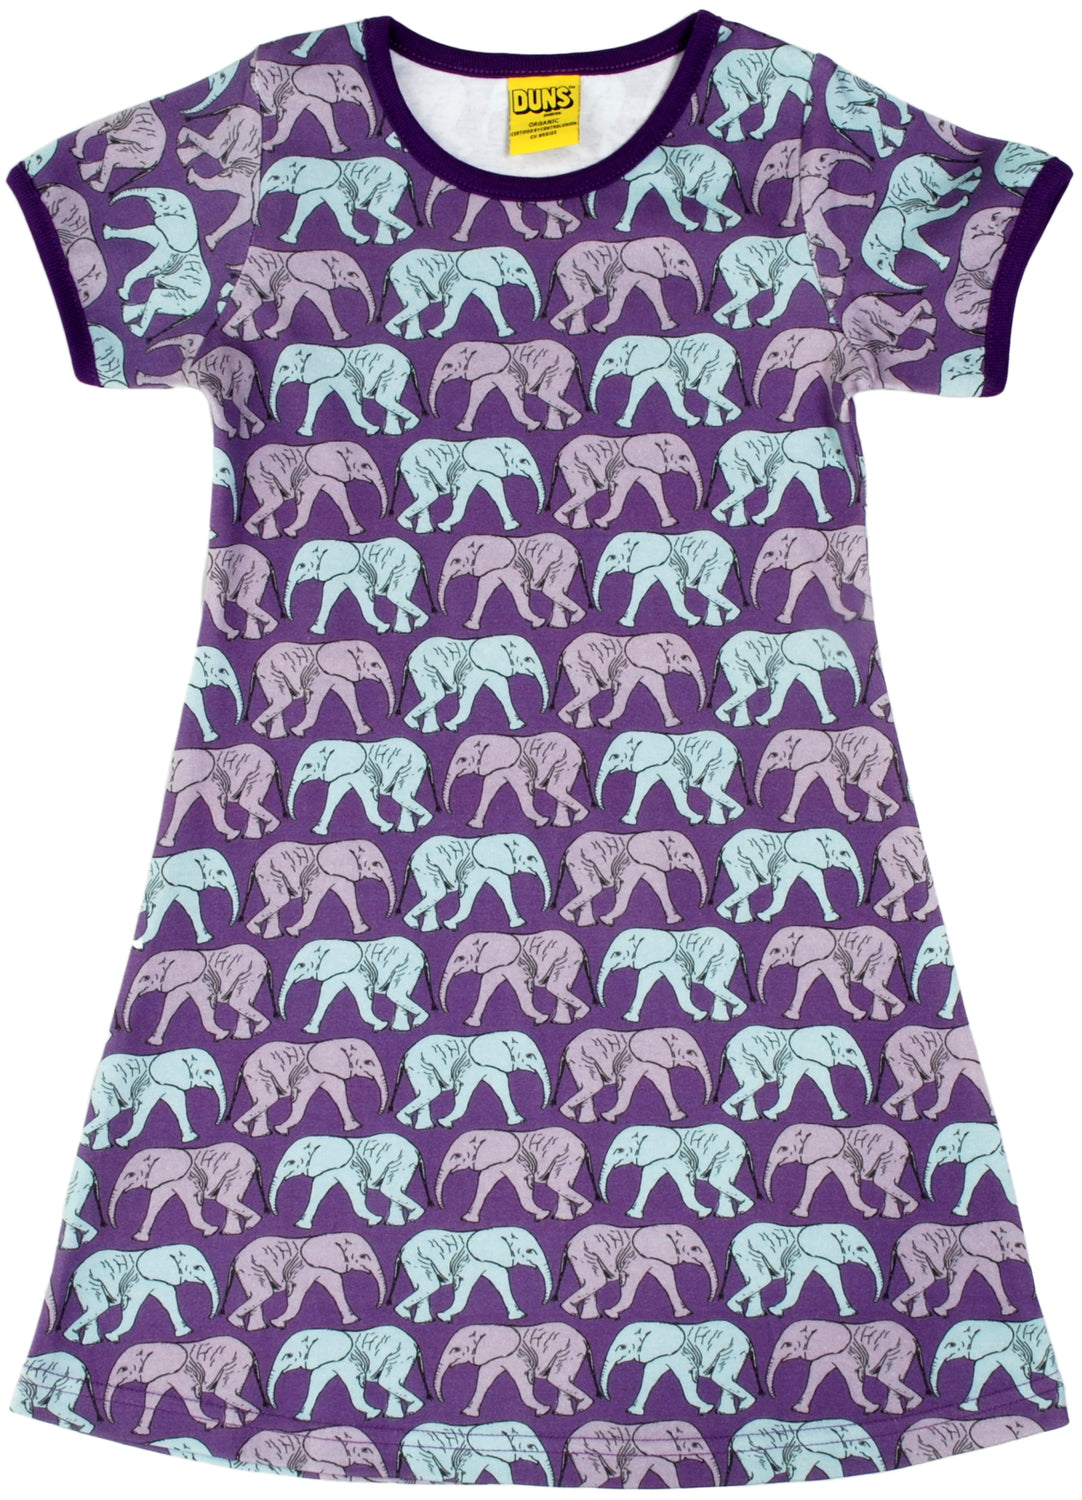 Duns Sweden - Shortsleeve Dress Elephants Purple